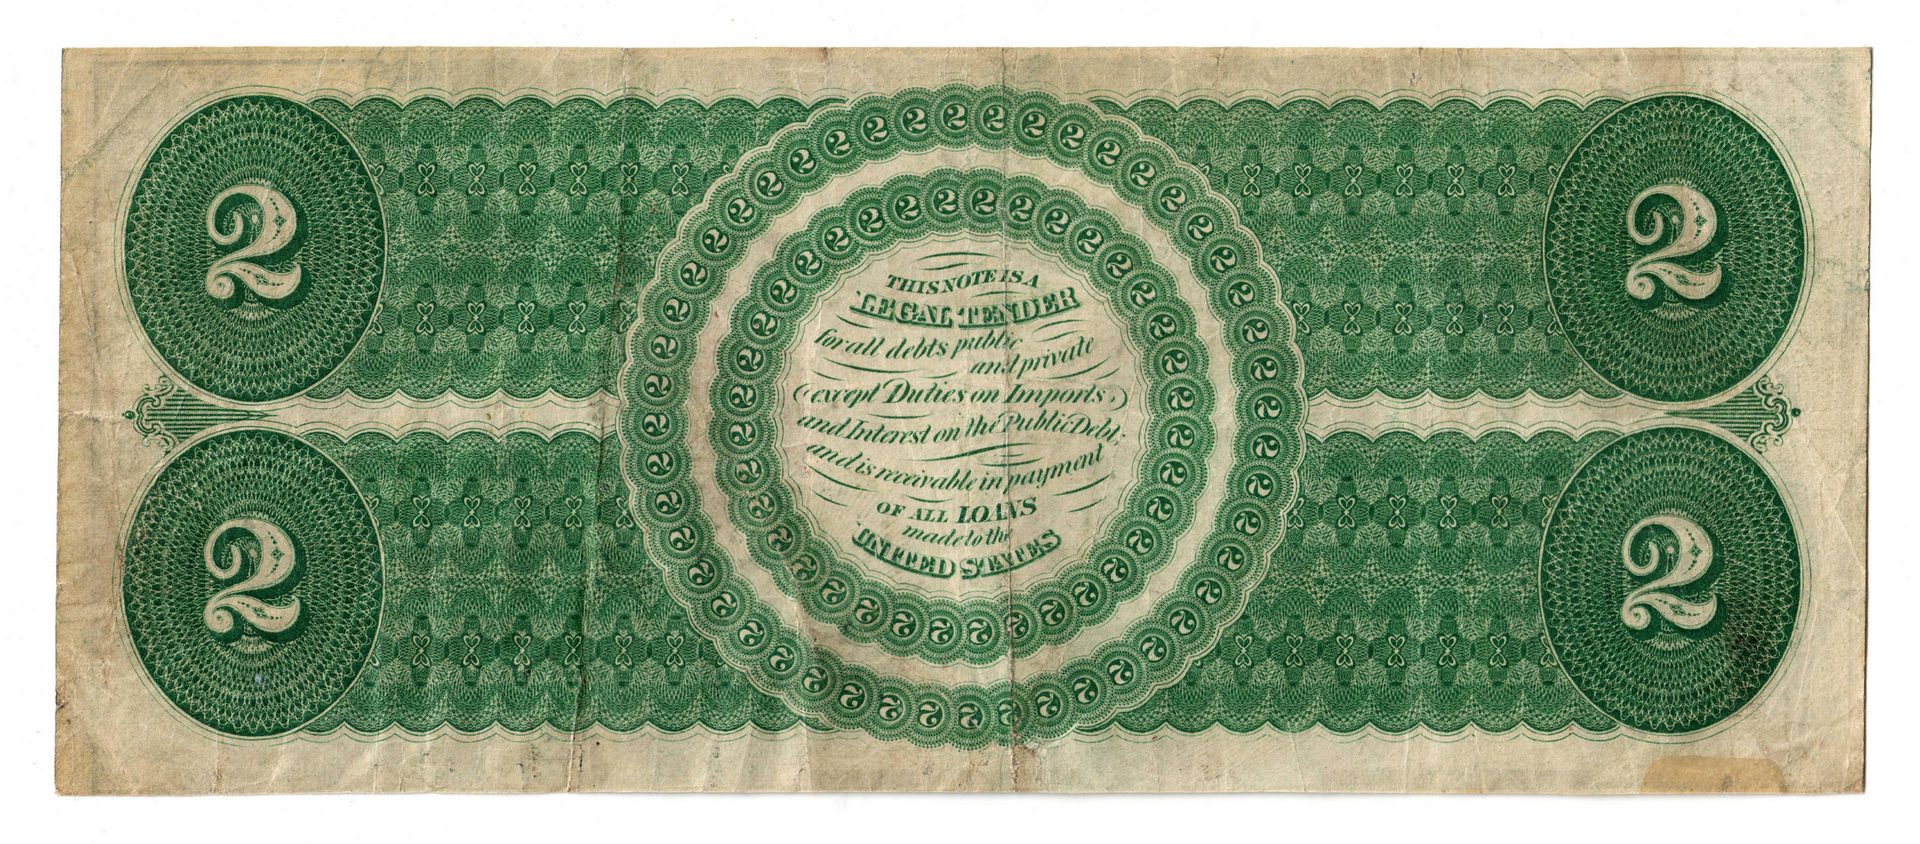 Lot 21: 1862 U.S. $2 Legal Tender Note